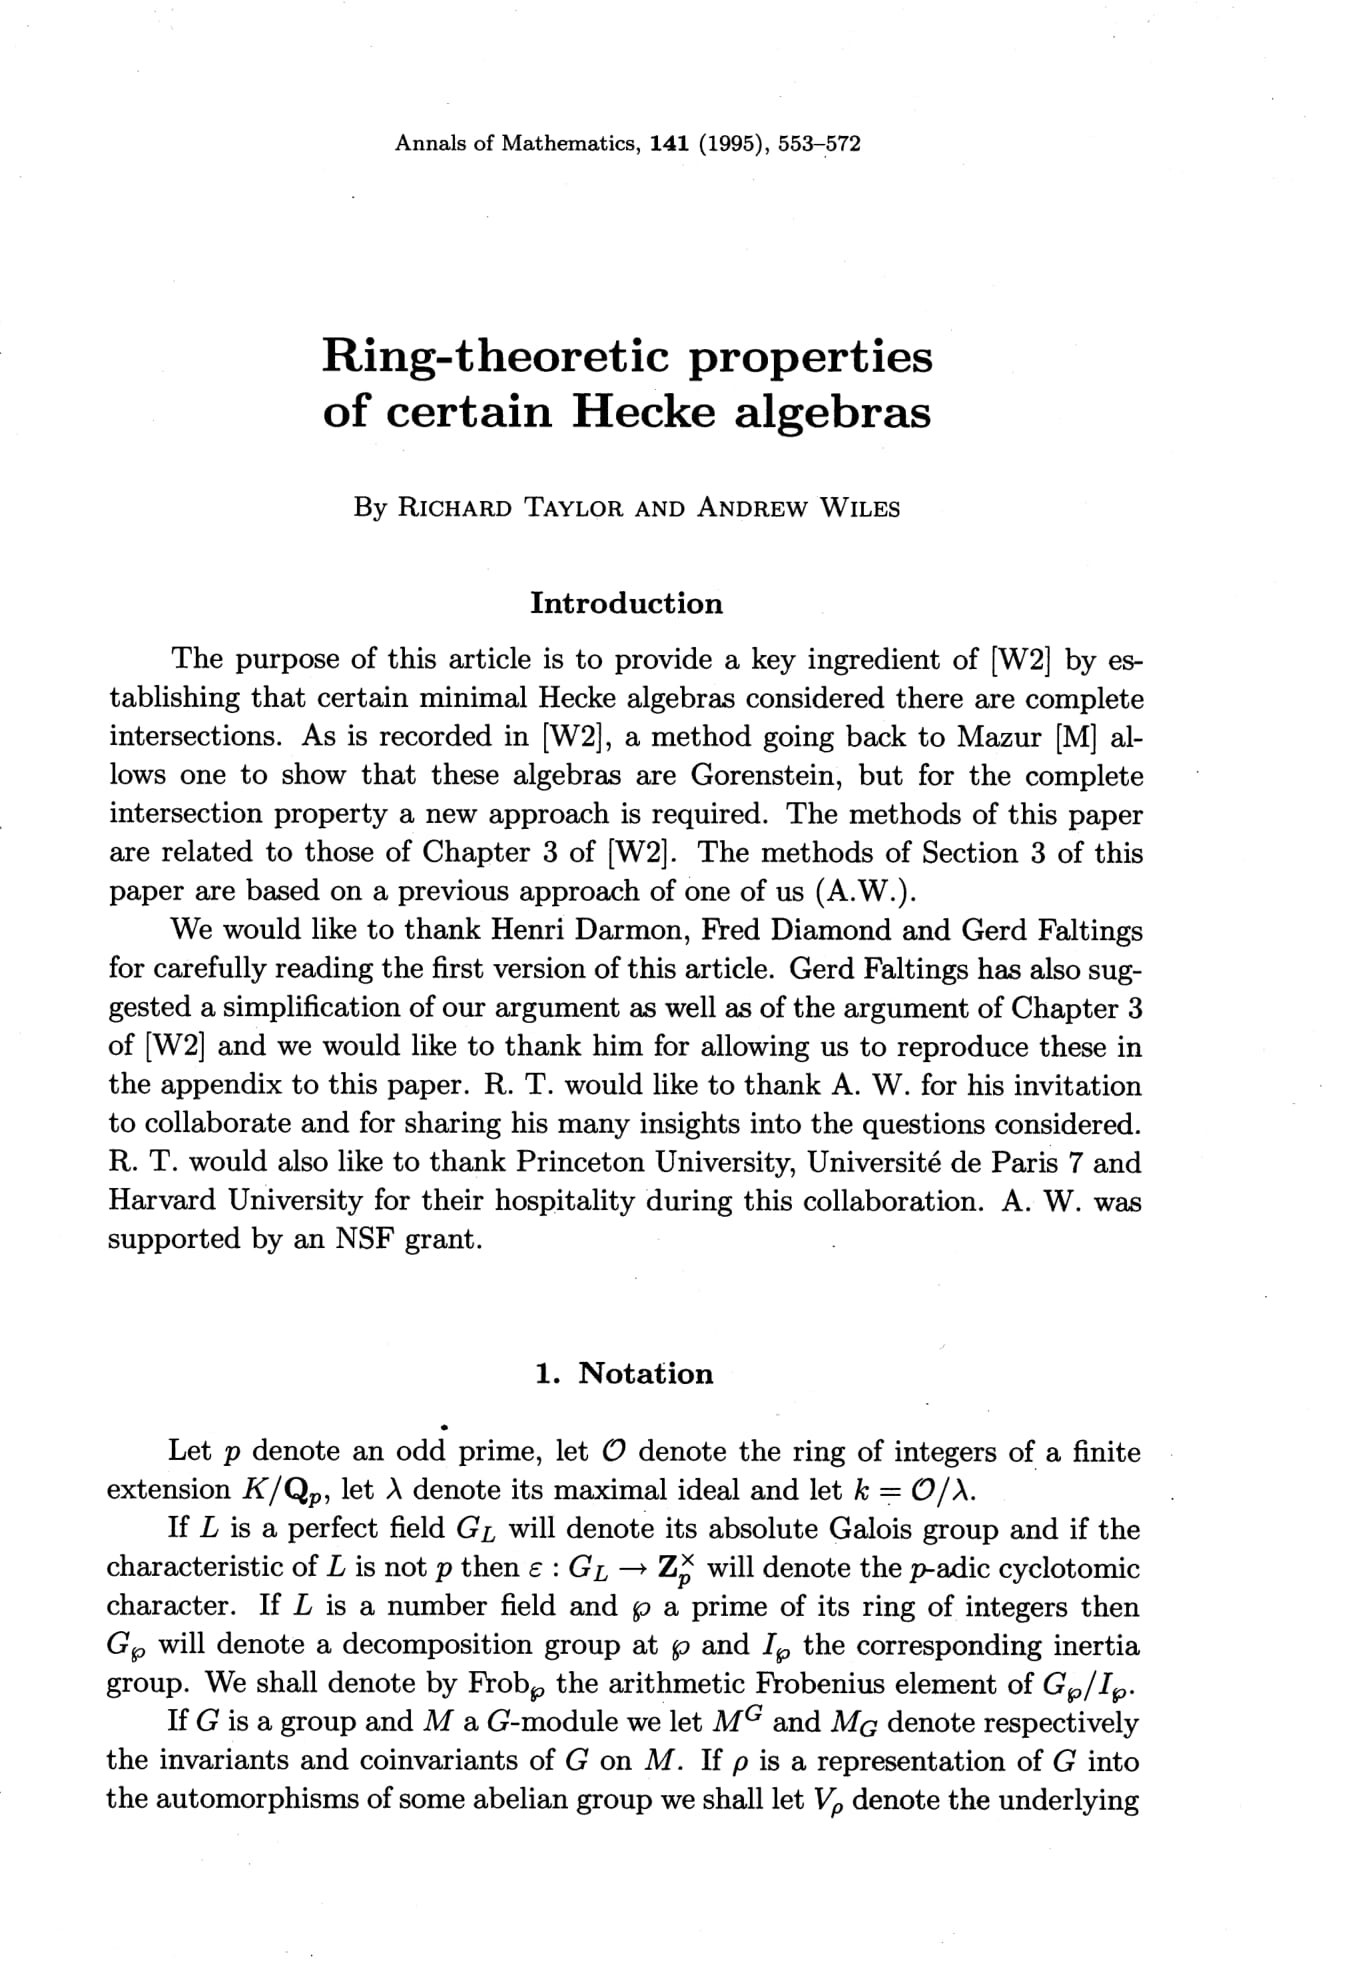 Richard Taylor, Andrew Wiles - Ring-theoretic properties of certain Hecke algebras